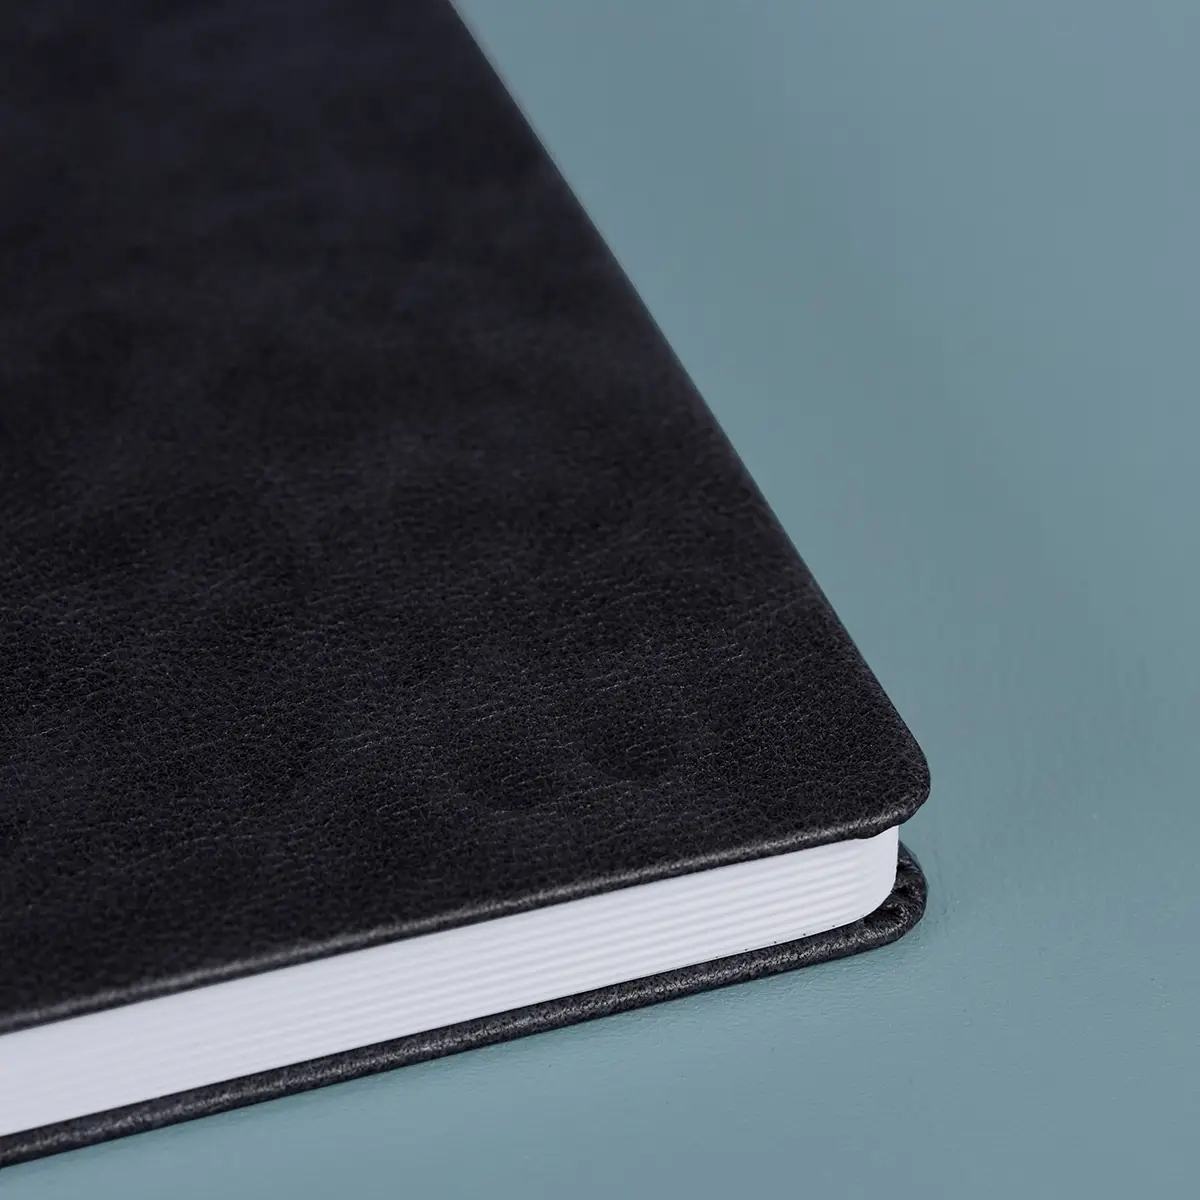 Erin Condren Focused Productivity Notebook - Softbound Black